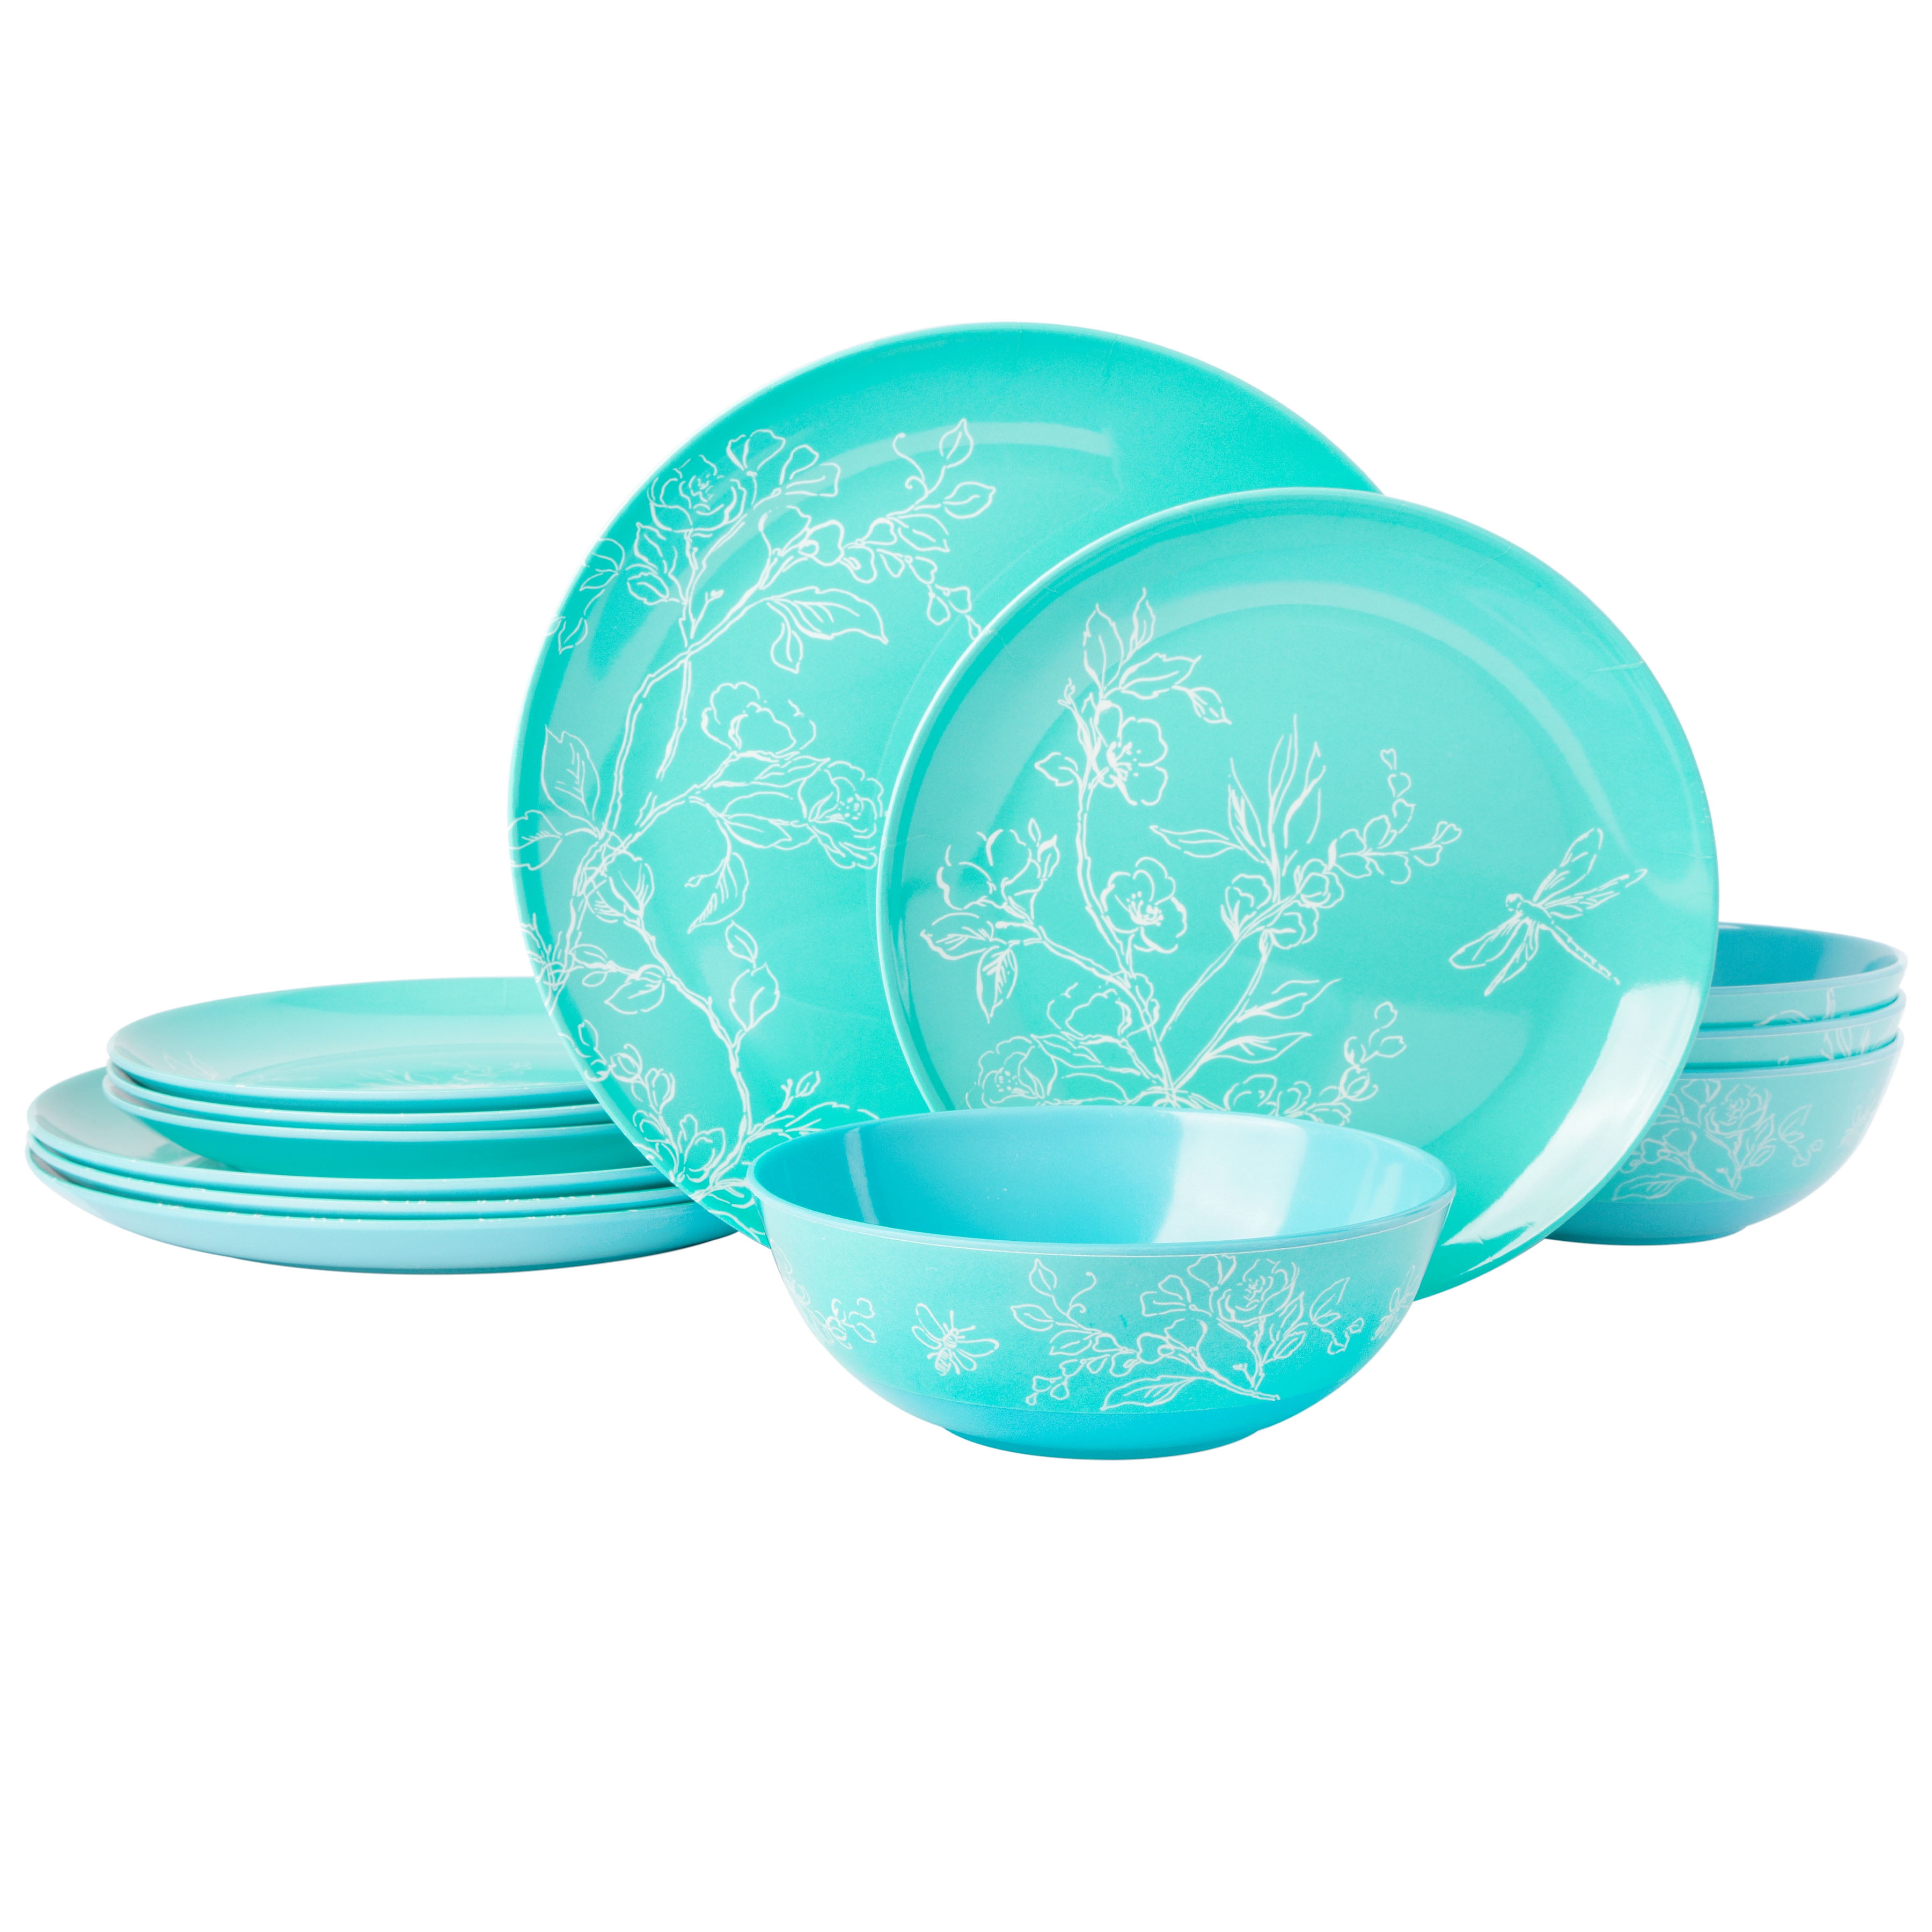 Melamine Dinnerware Set 12 PCS Teal Tableware Outdoor Plates Bowls Blue Green No Microware No Oven 